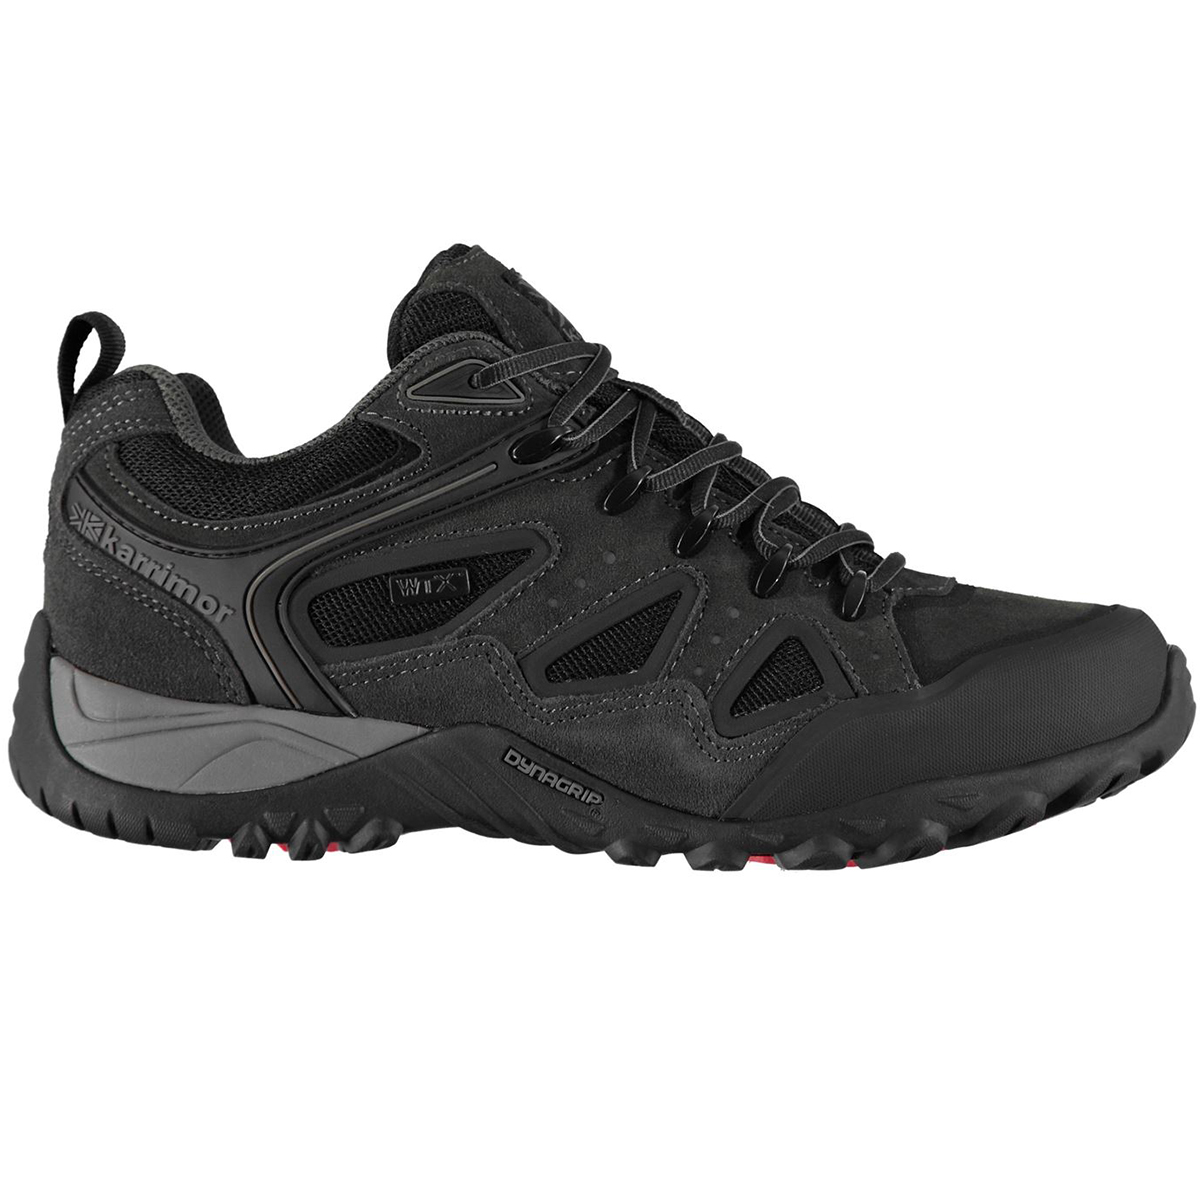 Karrimor Men's Ridge Wtx Waterproof Low Hiking Shoes - Black, 8